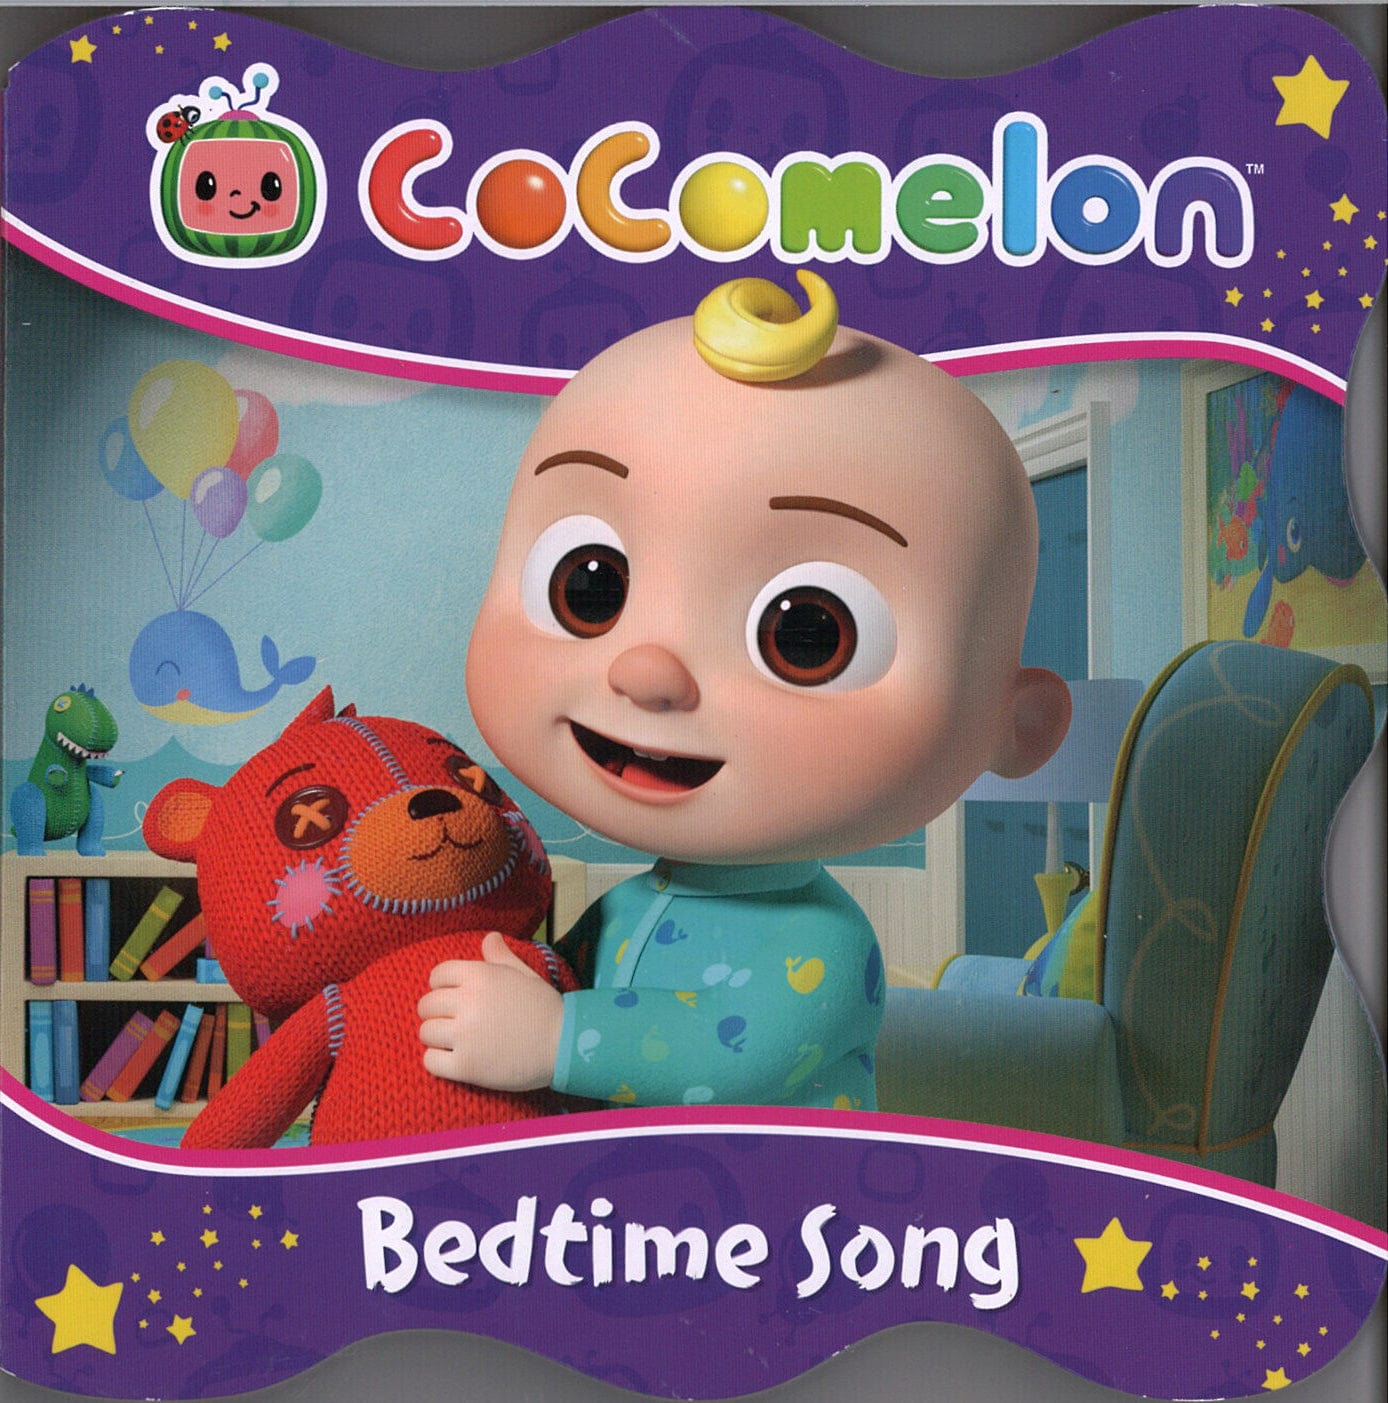 Bedtime Song - CoComelon